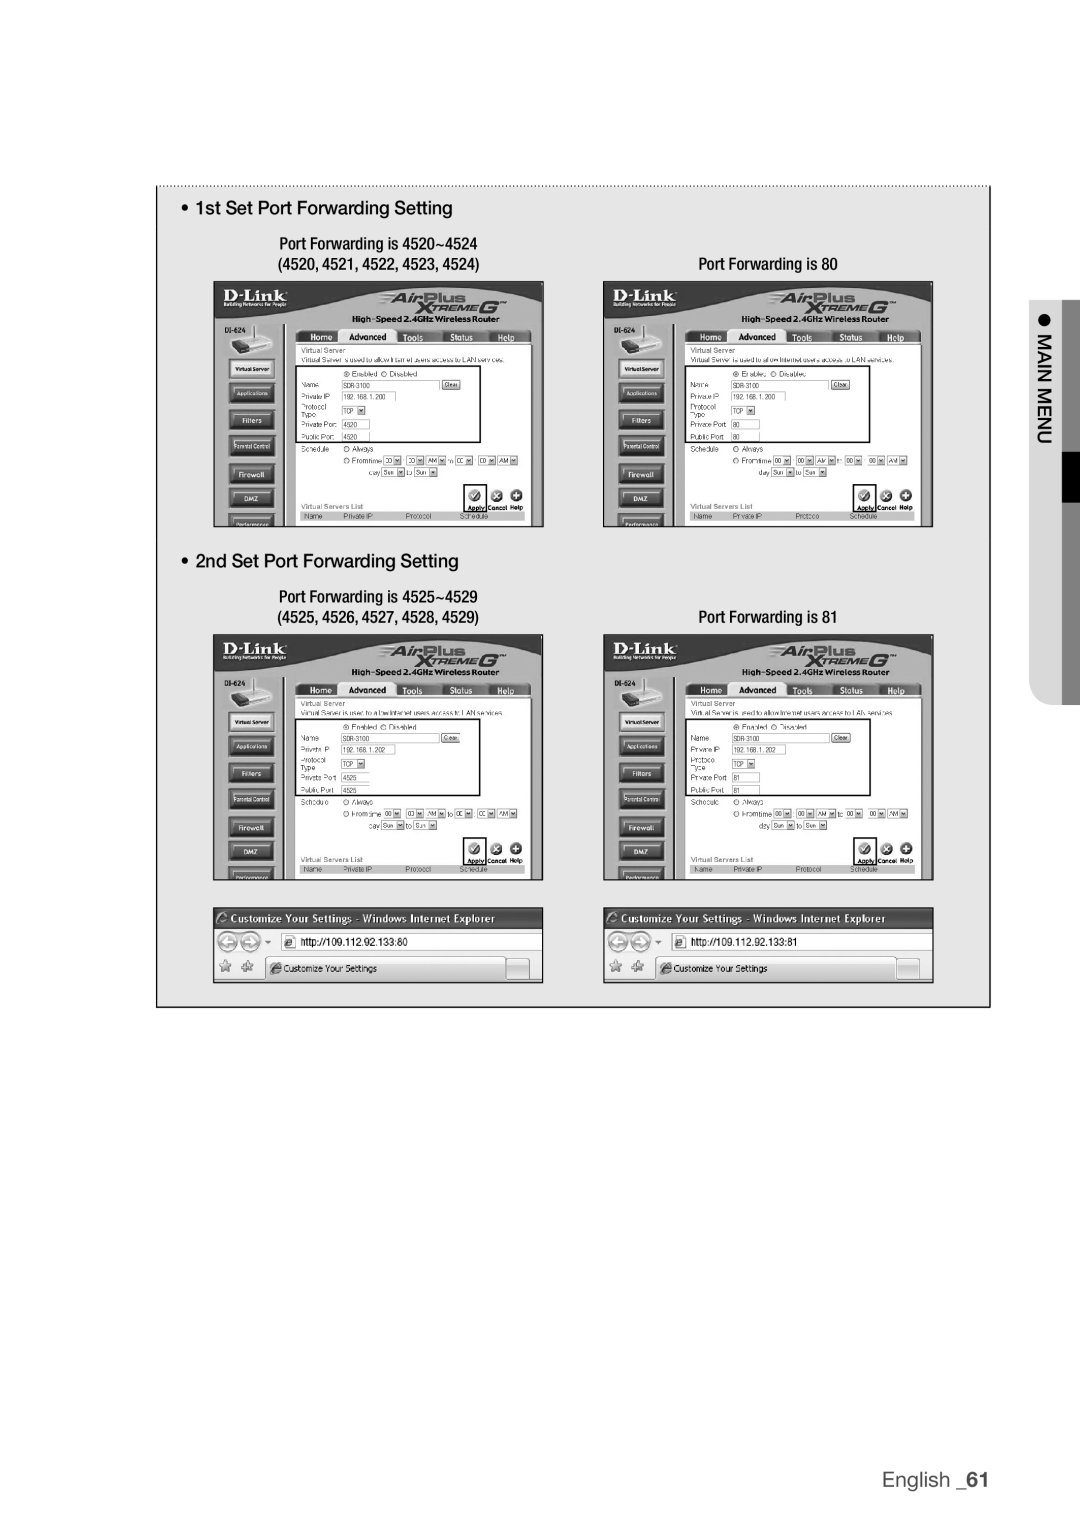 Samsung SDR3100 user manual English _61, •1st Set Port Forwarding Setting, •2nd Set Port Forwarding Setting, main menu 